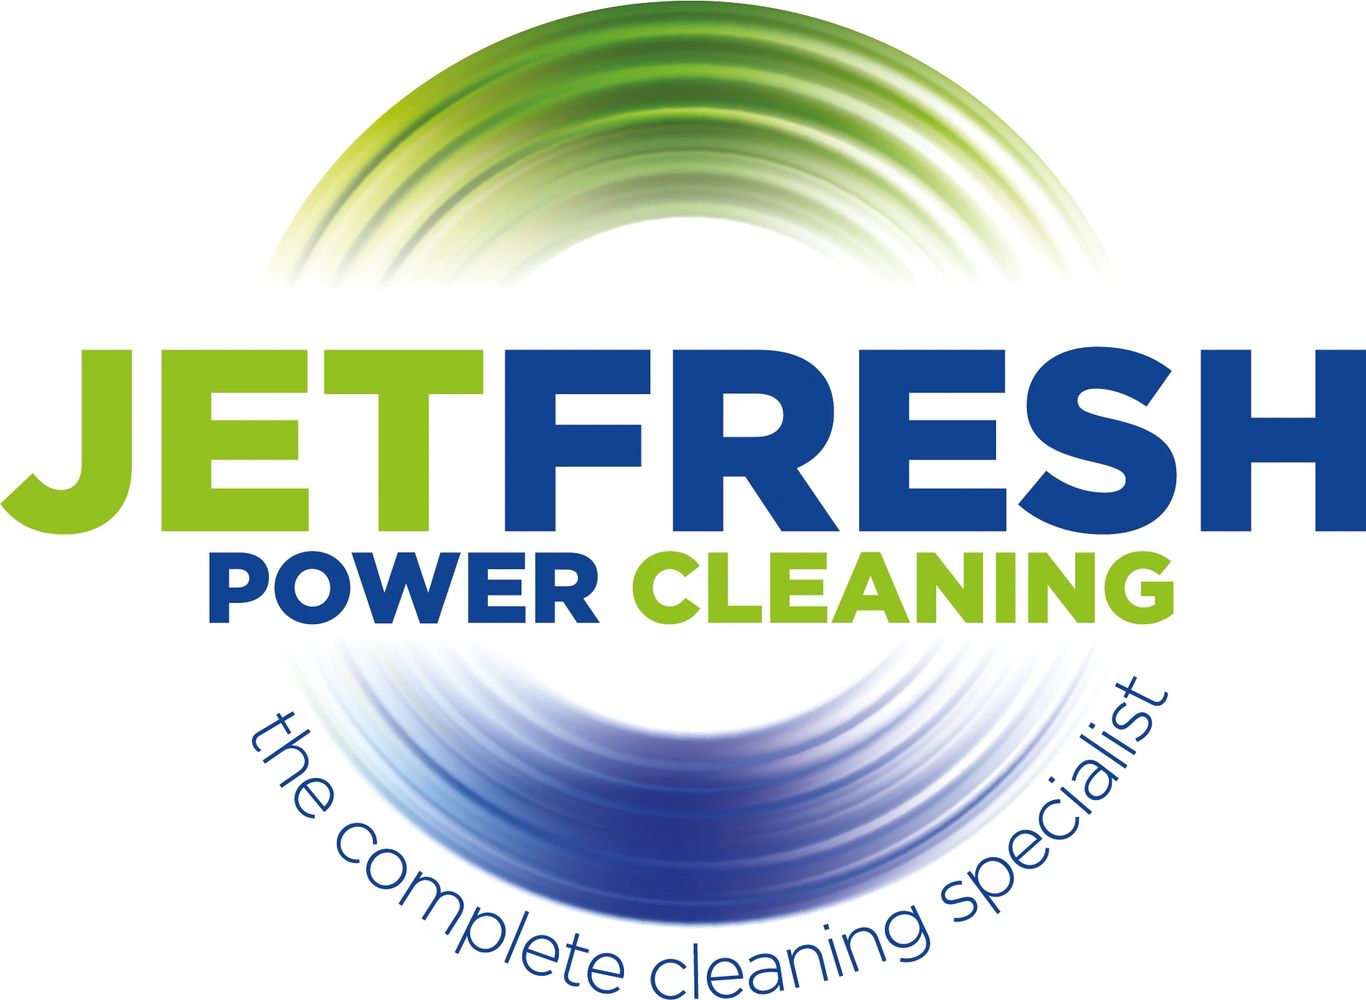 jetfresh power cleaning logo
chesterfield pressure washing